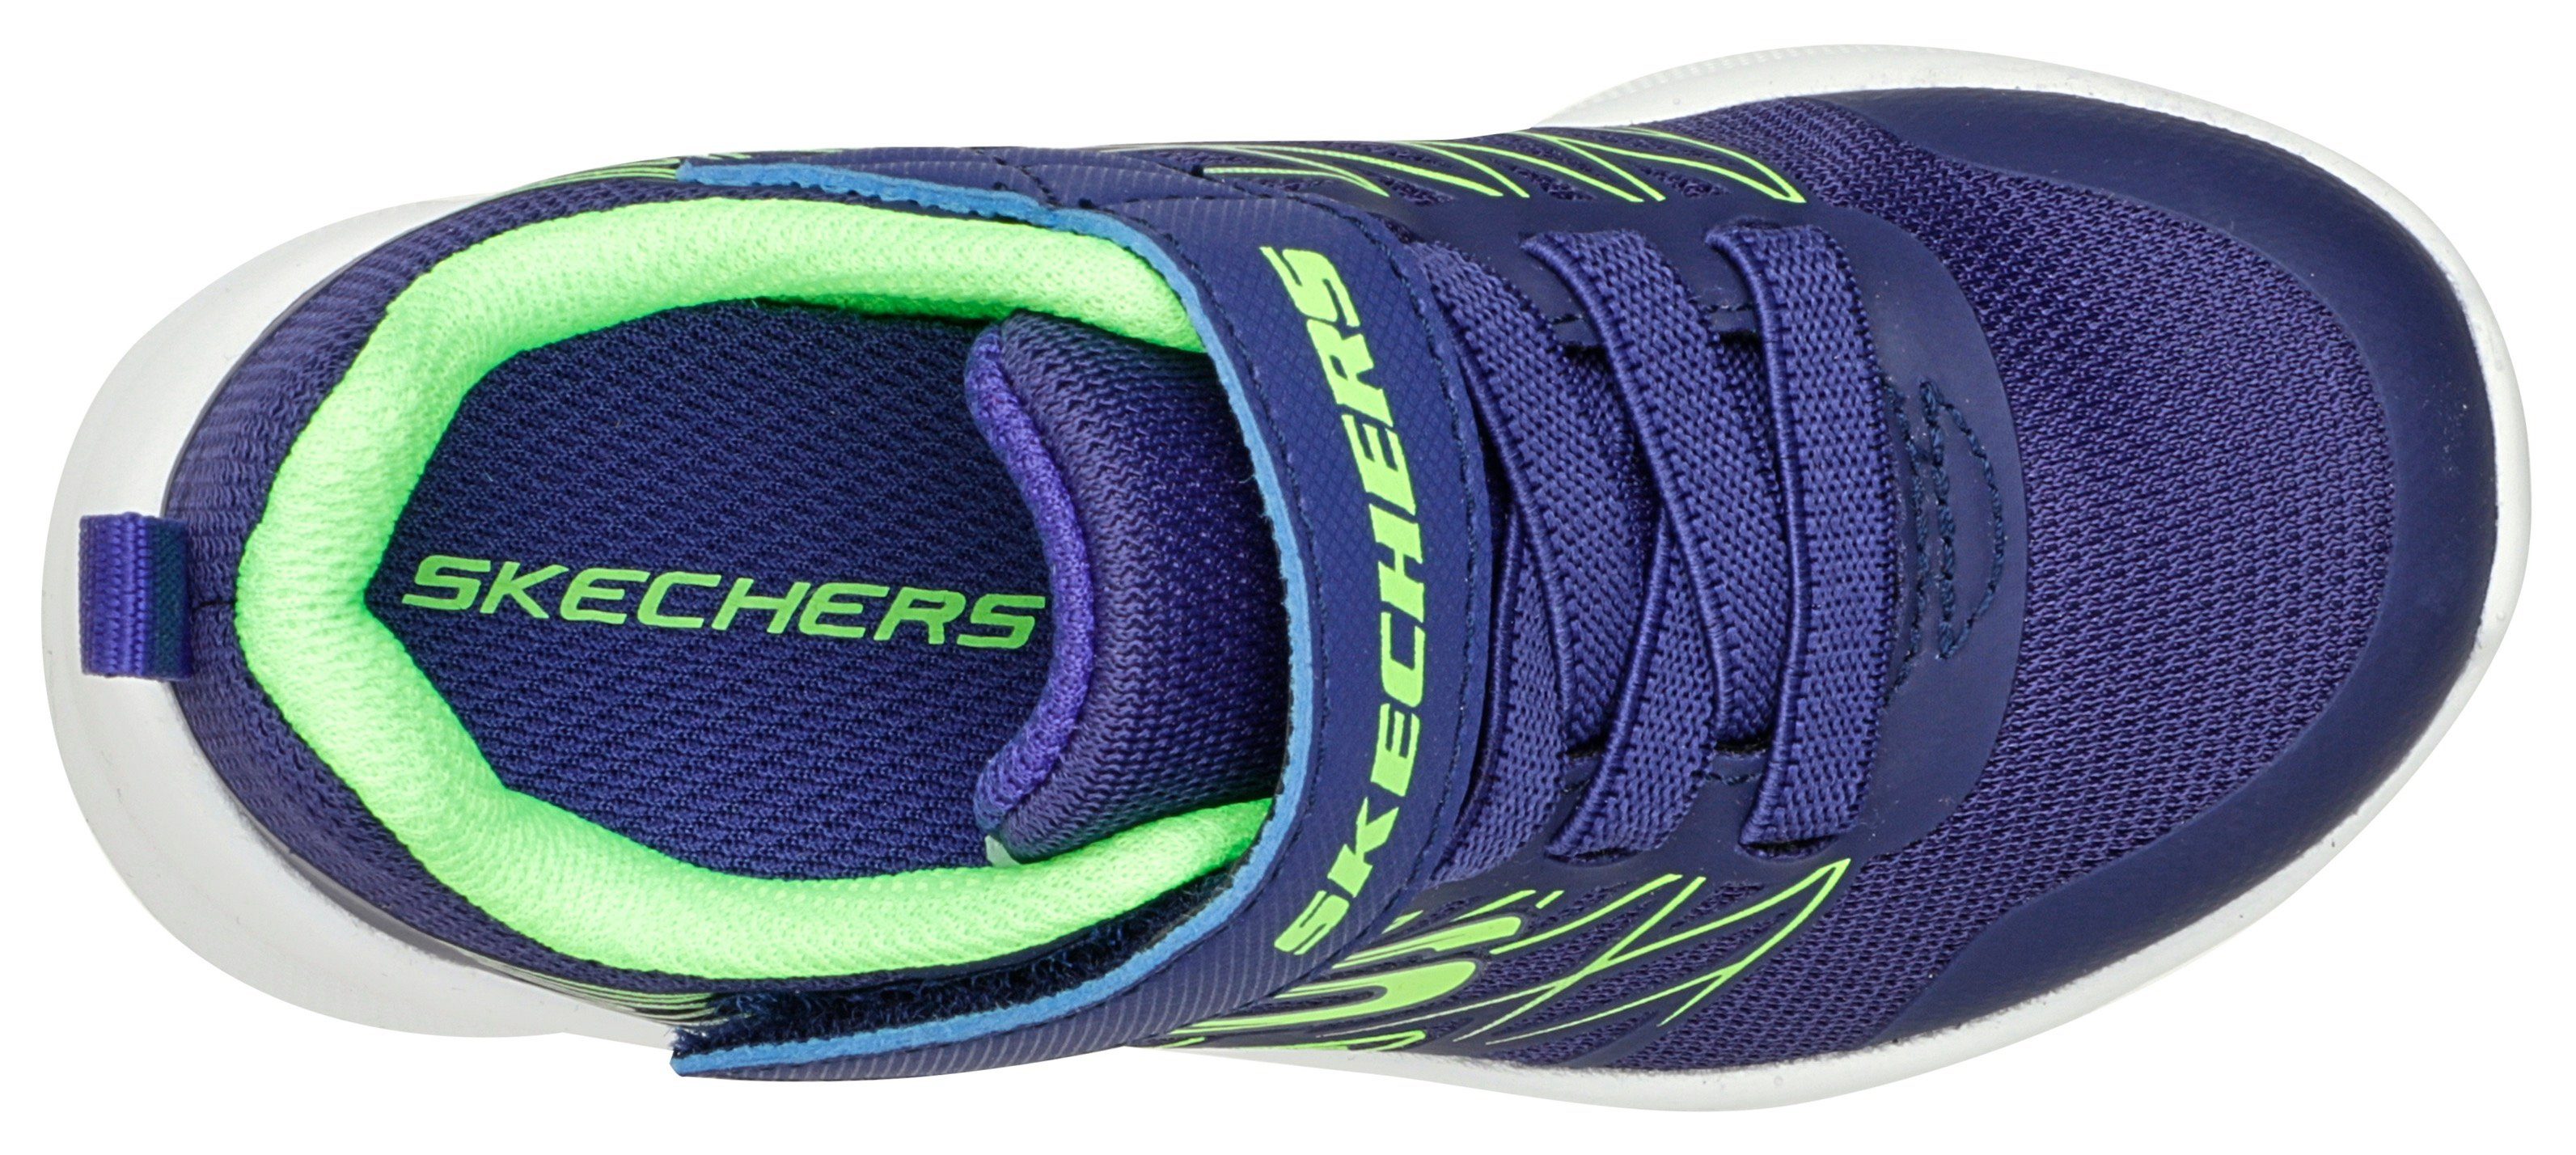 Sneaker Kids mit TEXLOR leichter Skechers Laufsohle MICROSPEC